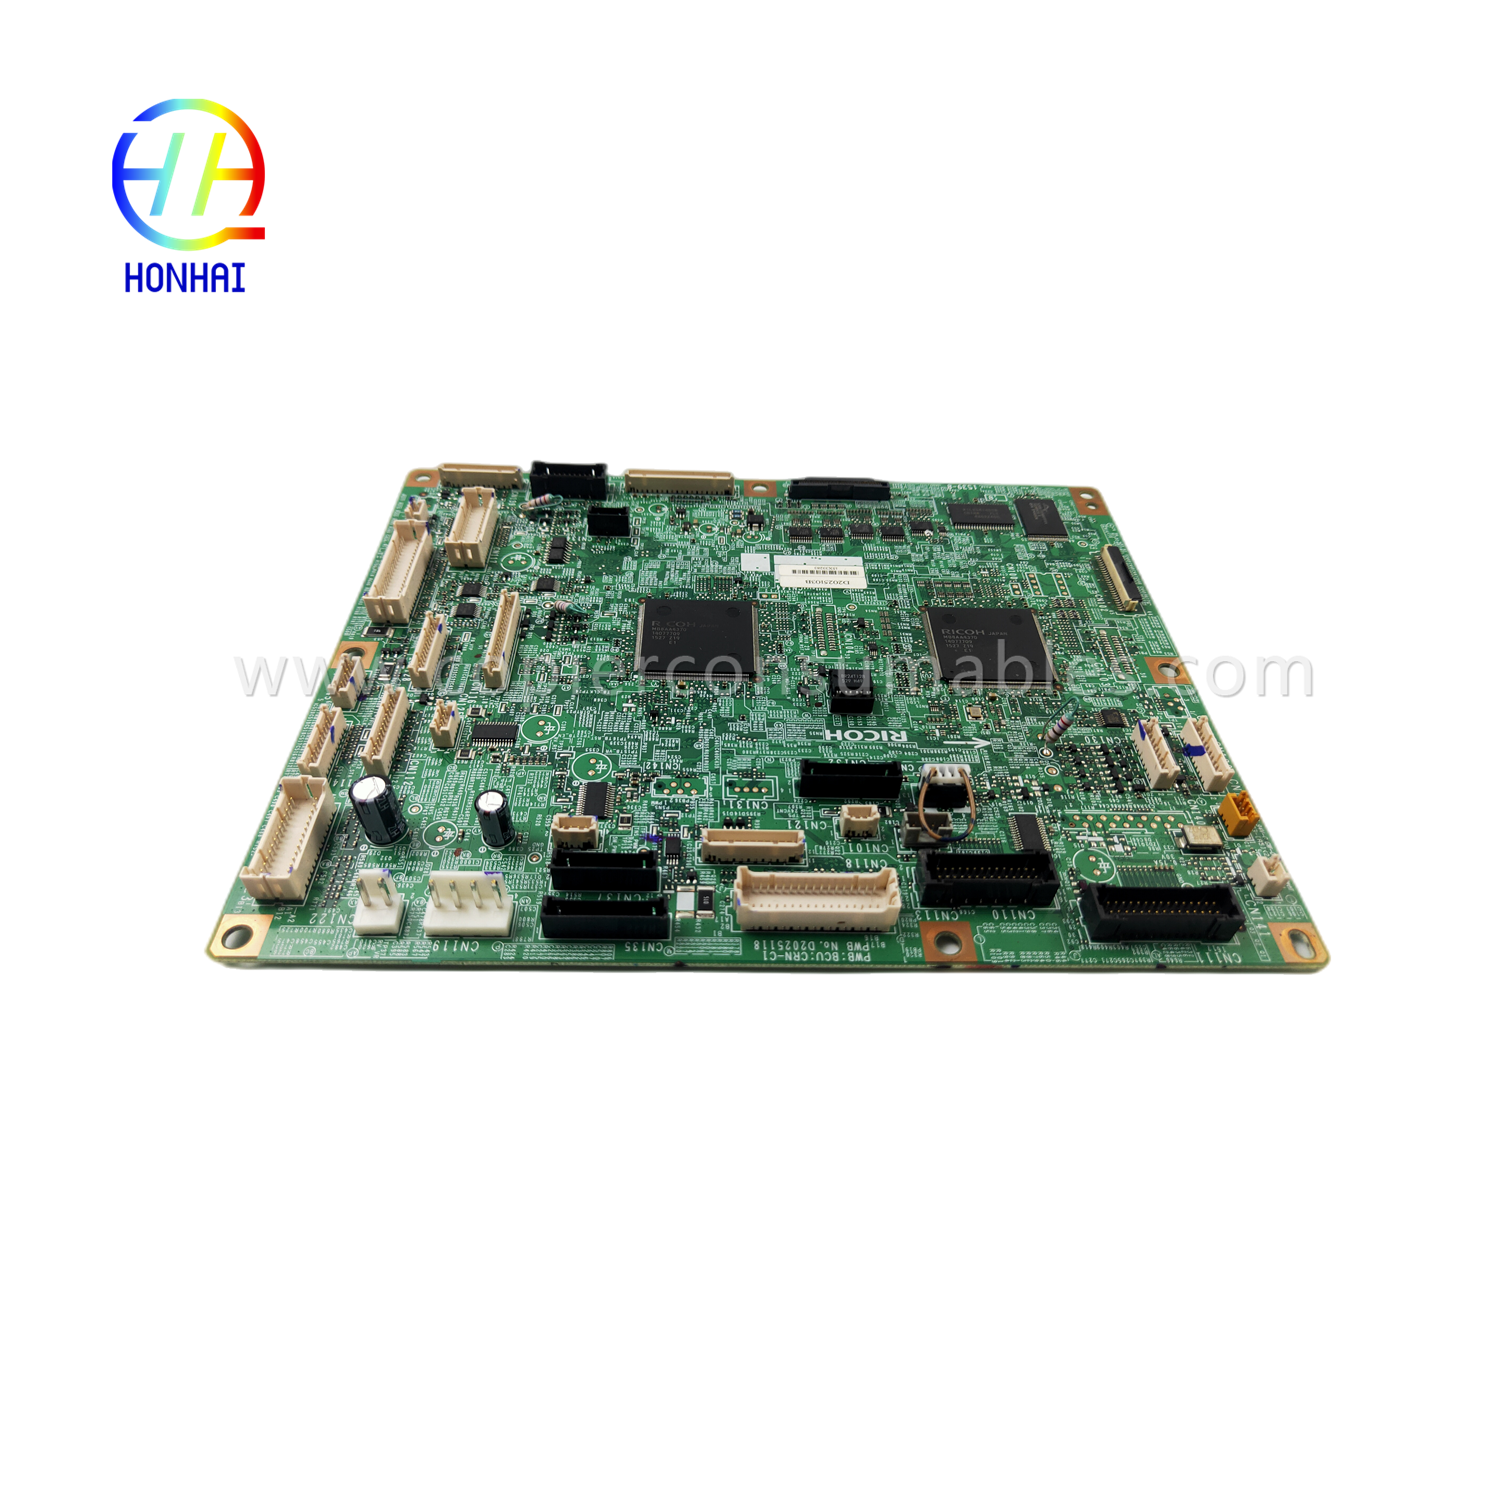 https://c585.goodao.net/bicu-board-for-ricoh-3045-3035-lanier-ld235-ld245-savin-4035-4045-bicu-board-assembly-product/